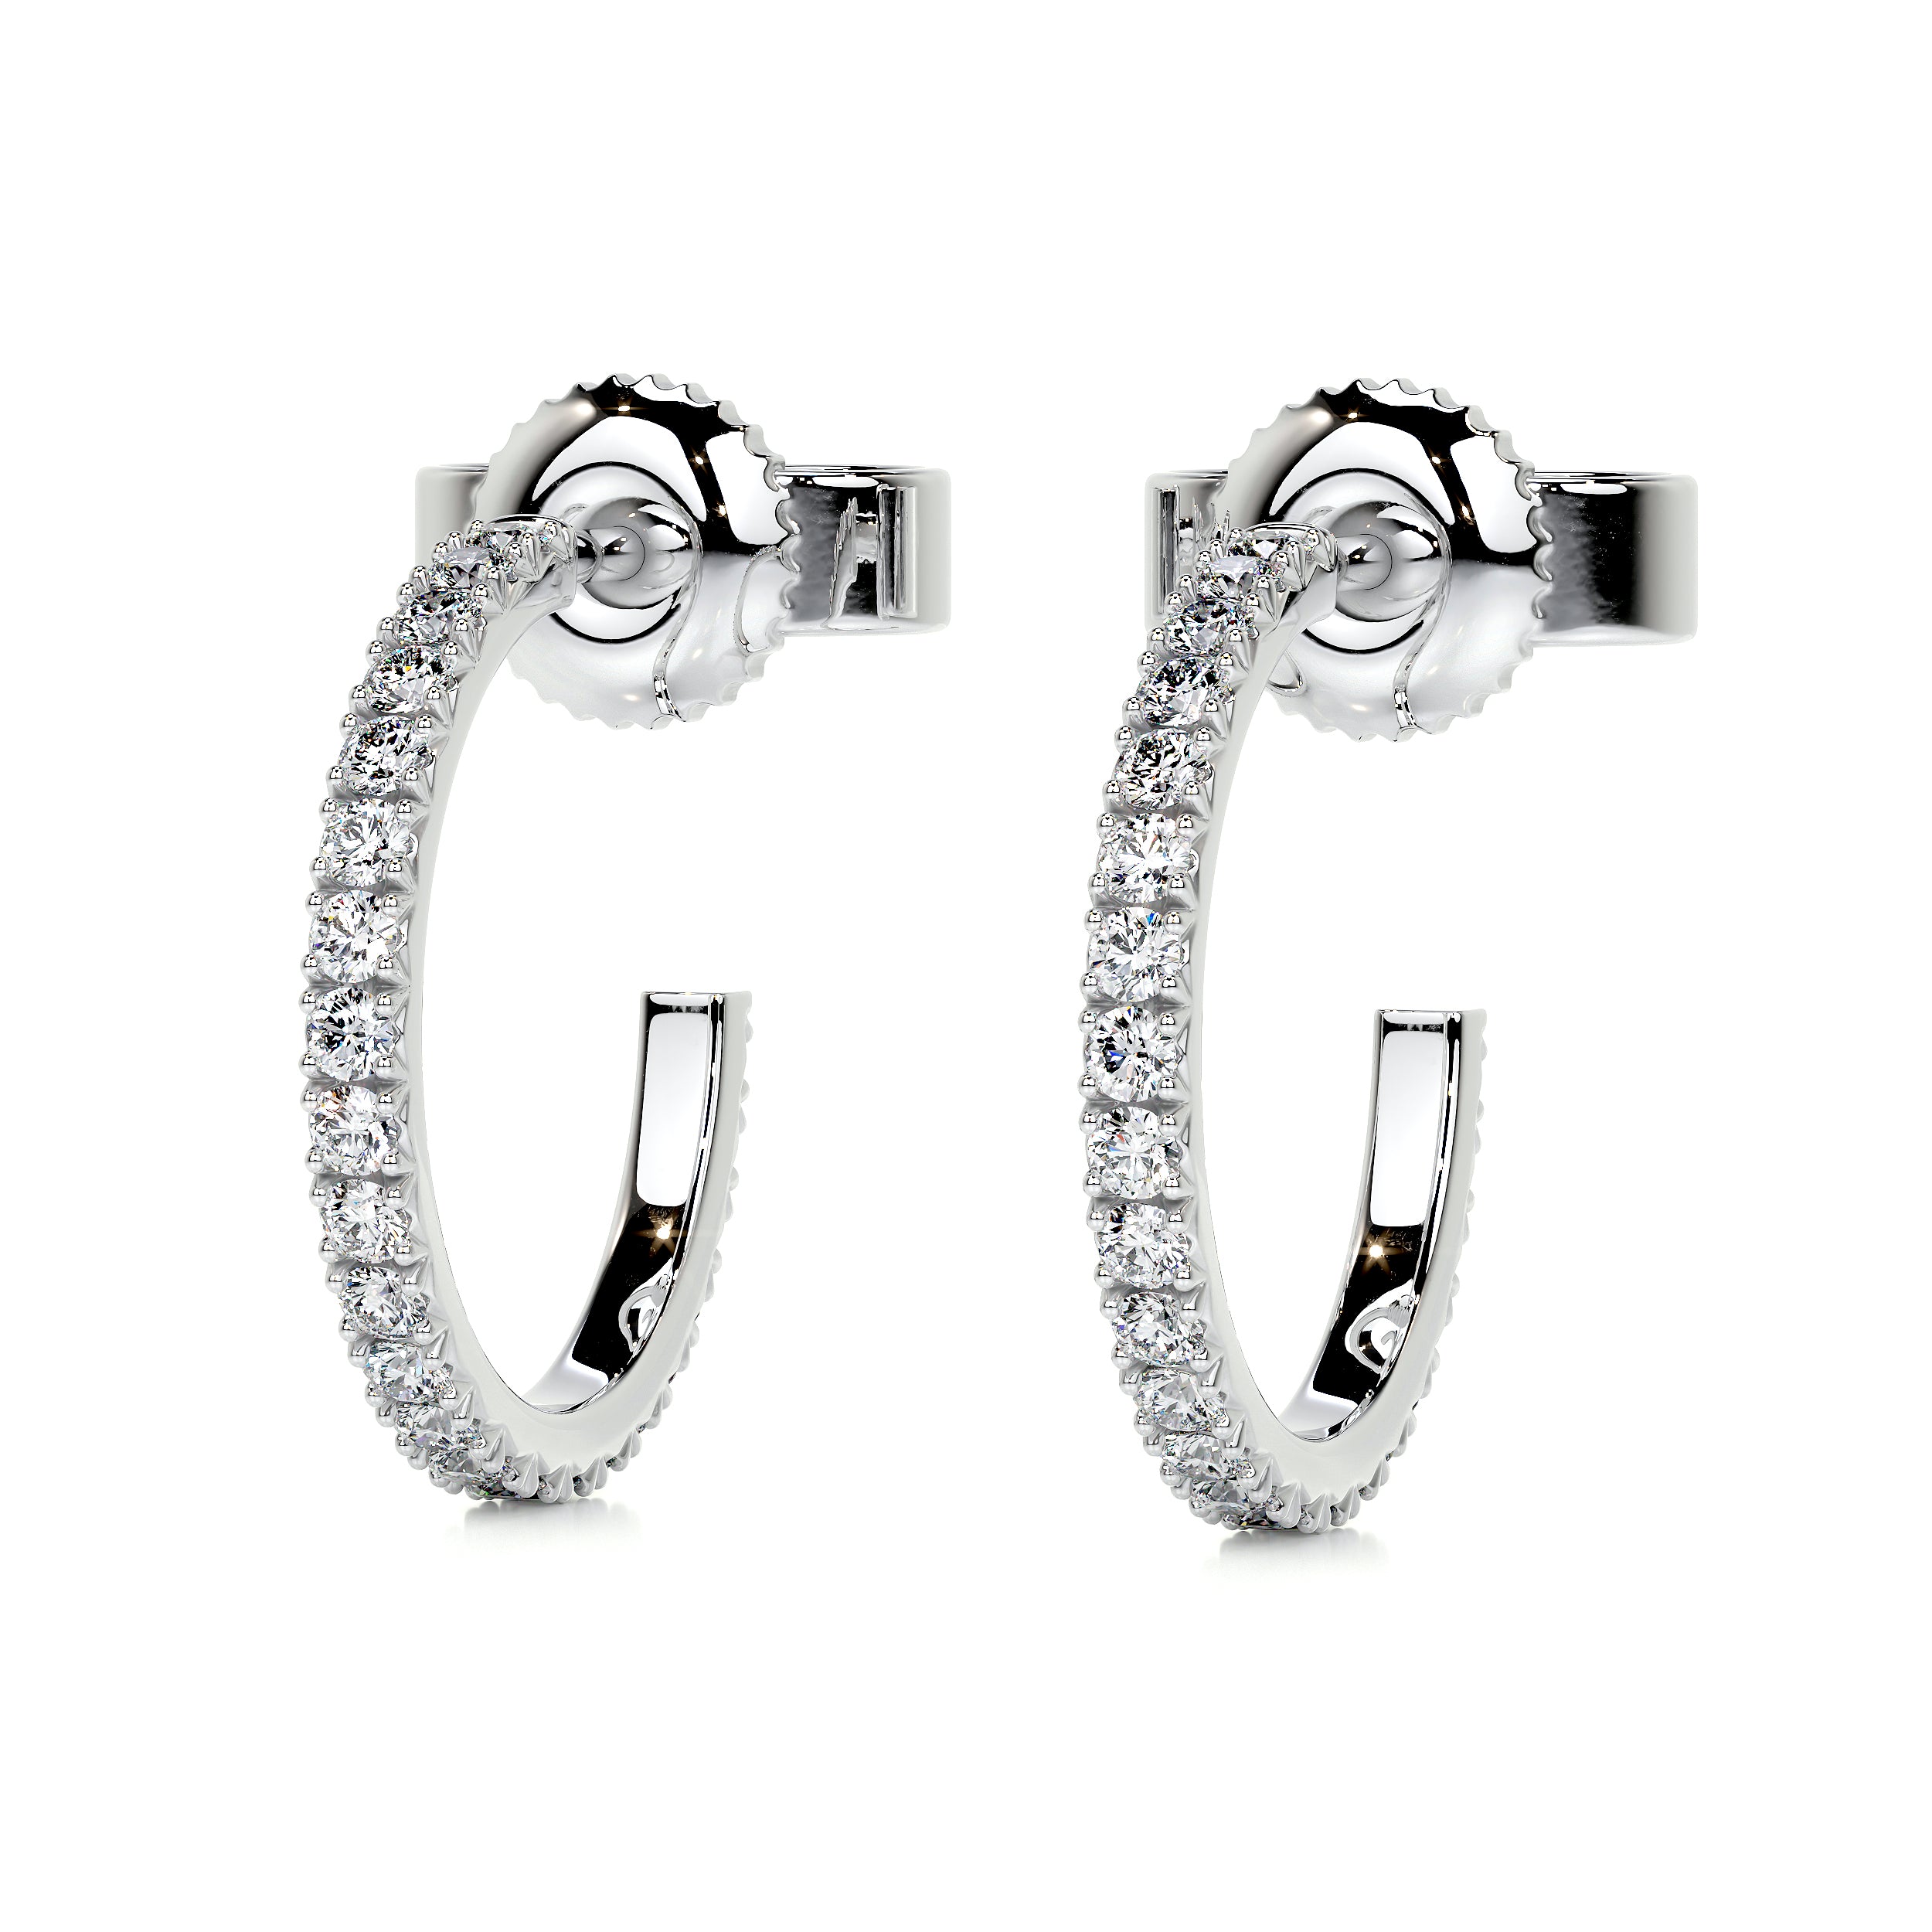 Nicole Diamond Earrings   (0.50 Carat) -18K White Gold